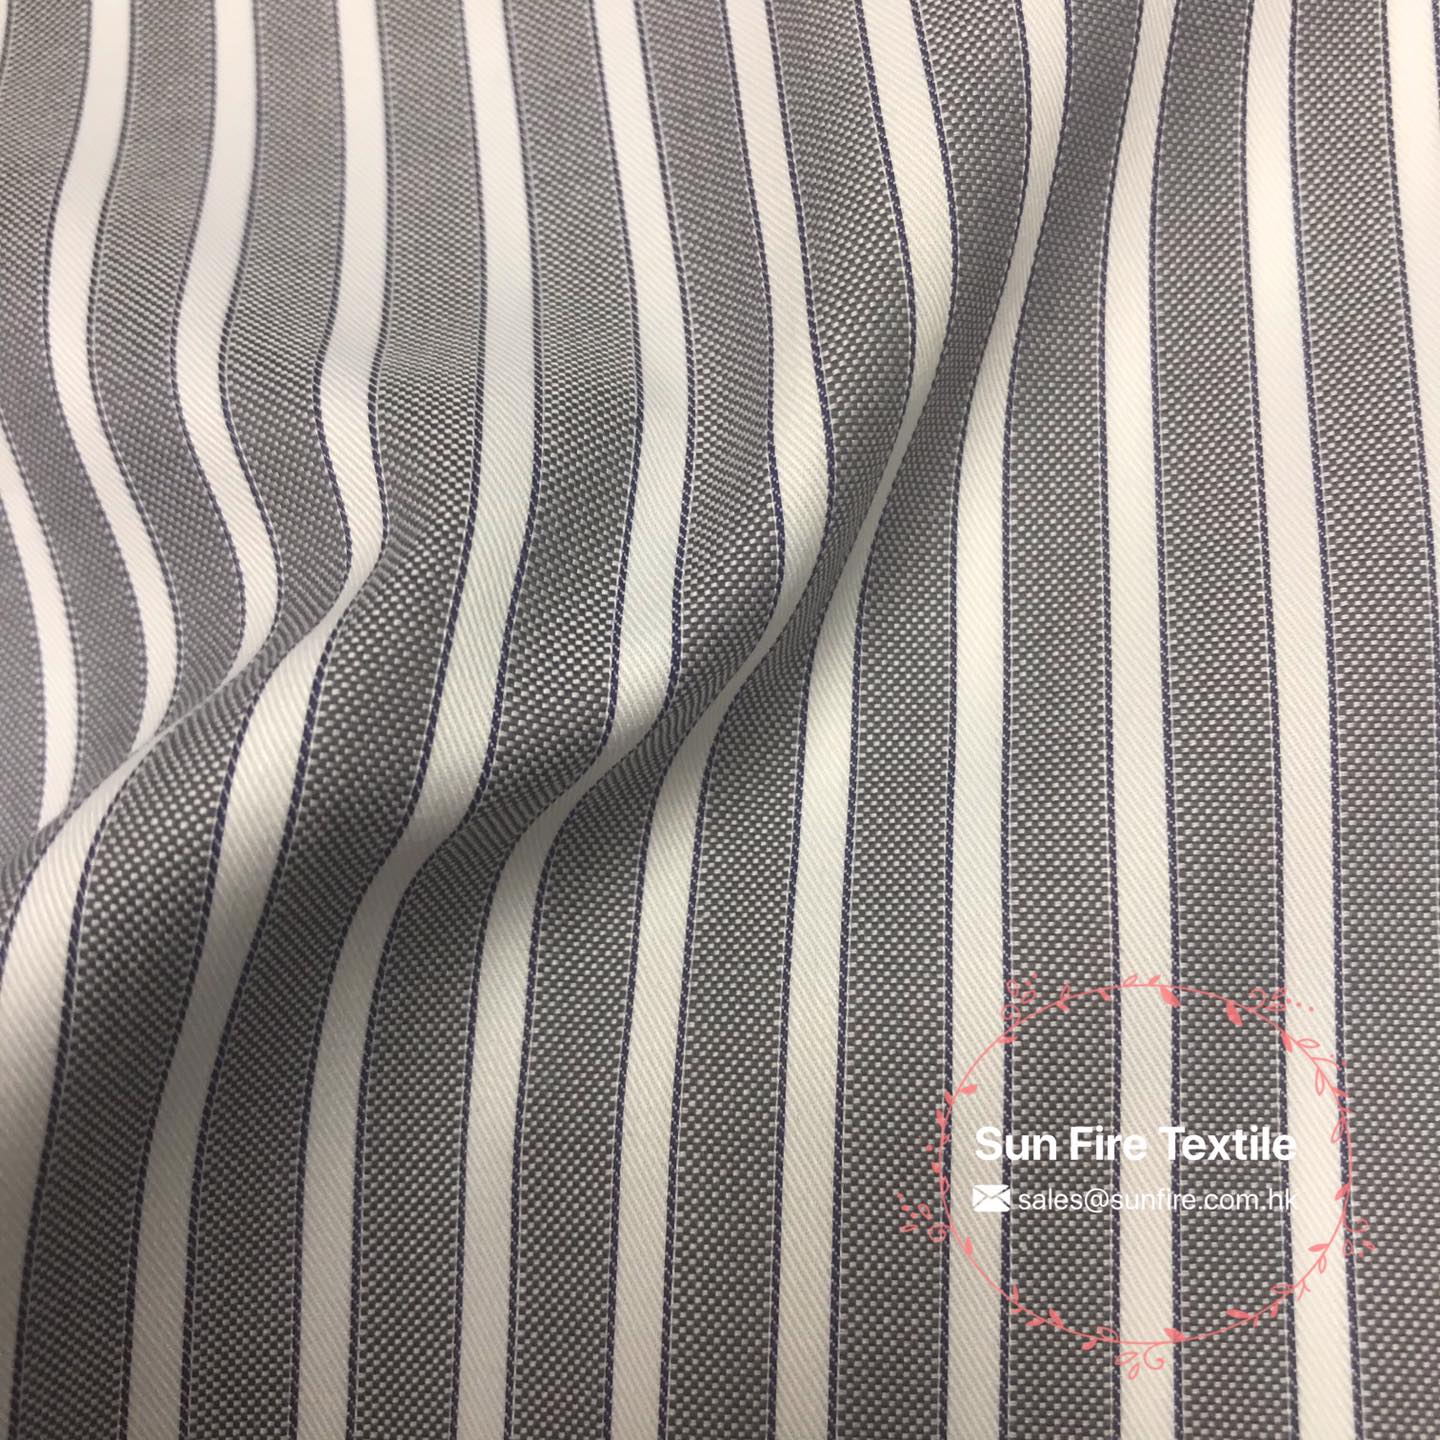 Do you like Vertical or Horizontal stripe on the shirt